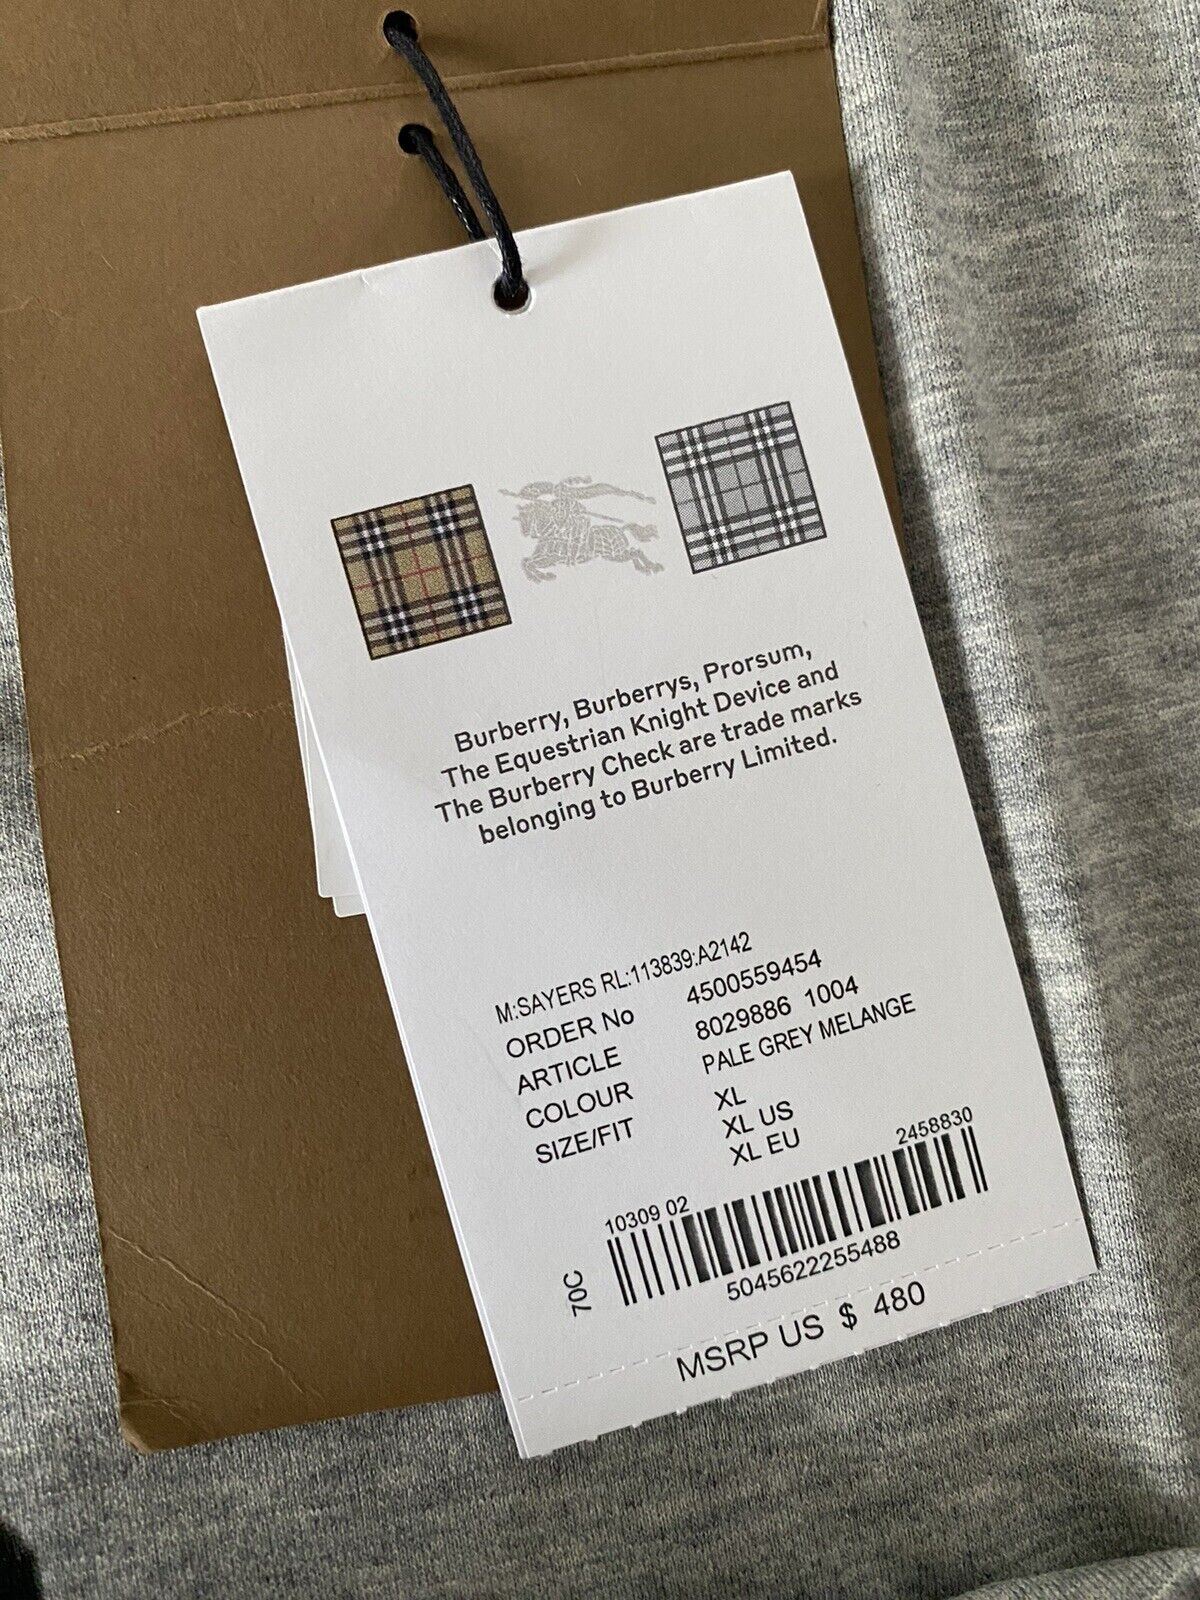 NWT $480 Burberry Sayers Gray Swan Print Cotton T-shirt XL (Oversized) Portugal